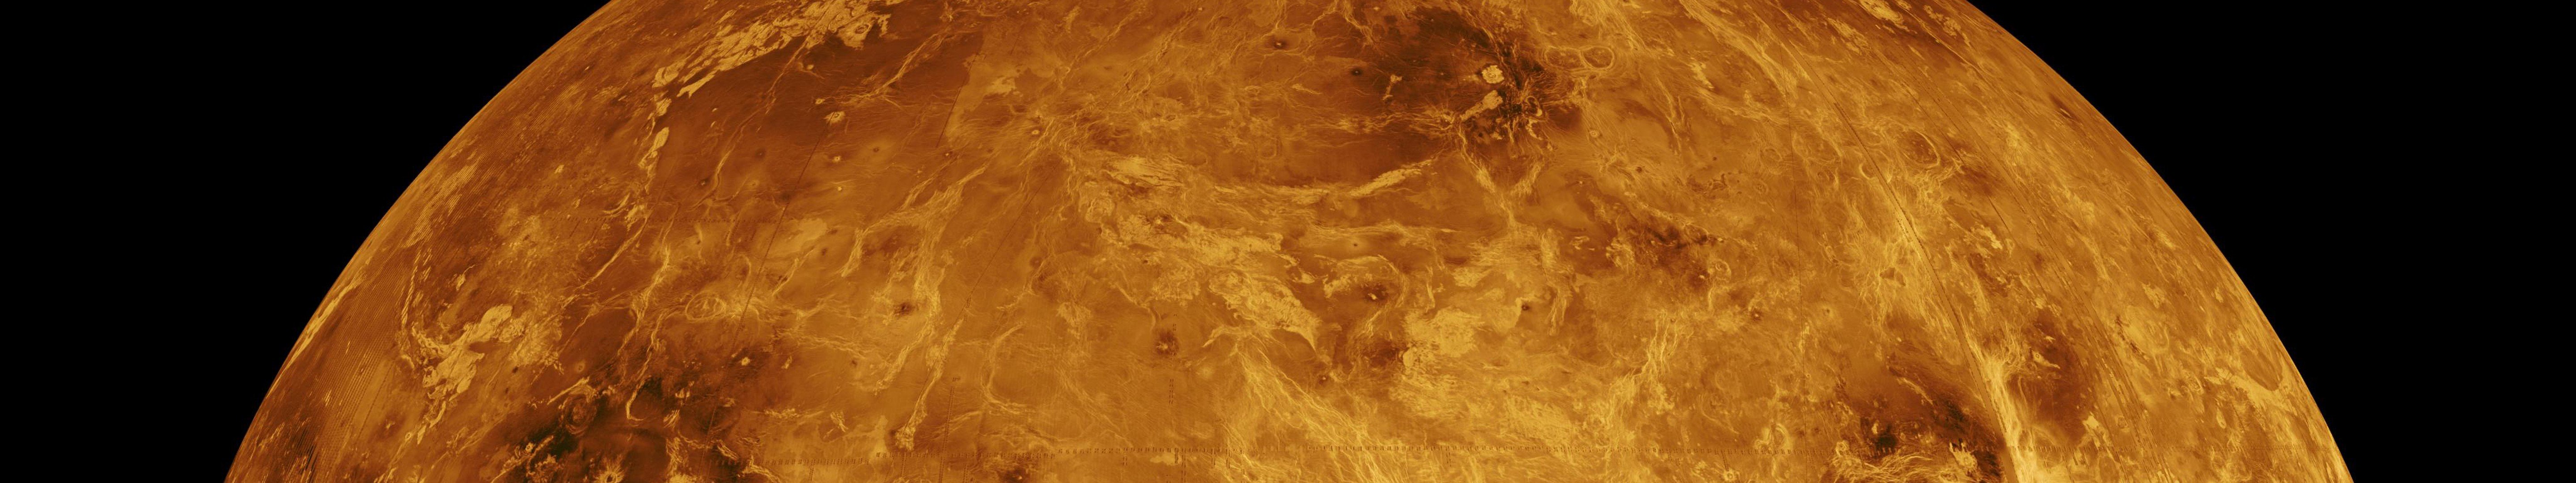 Venus, NASA, Brown, Gold, Black, Space, Crater, Planet Wallpaper